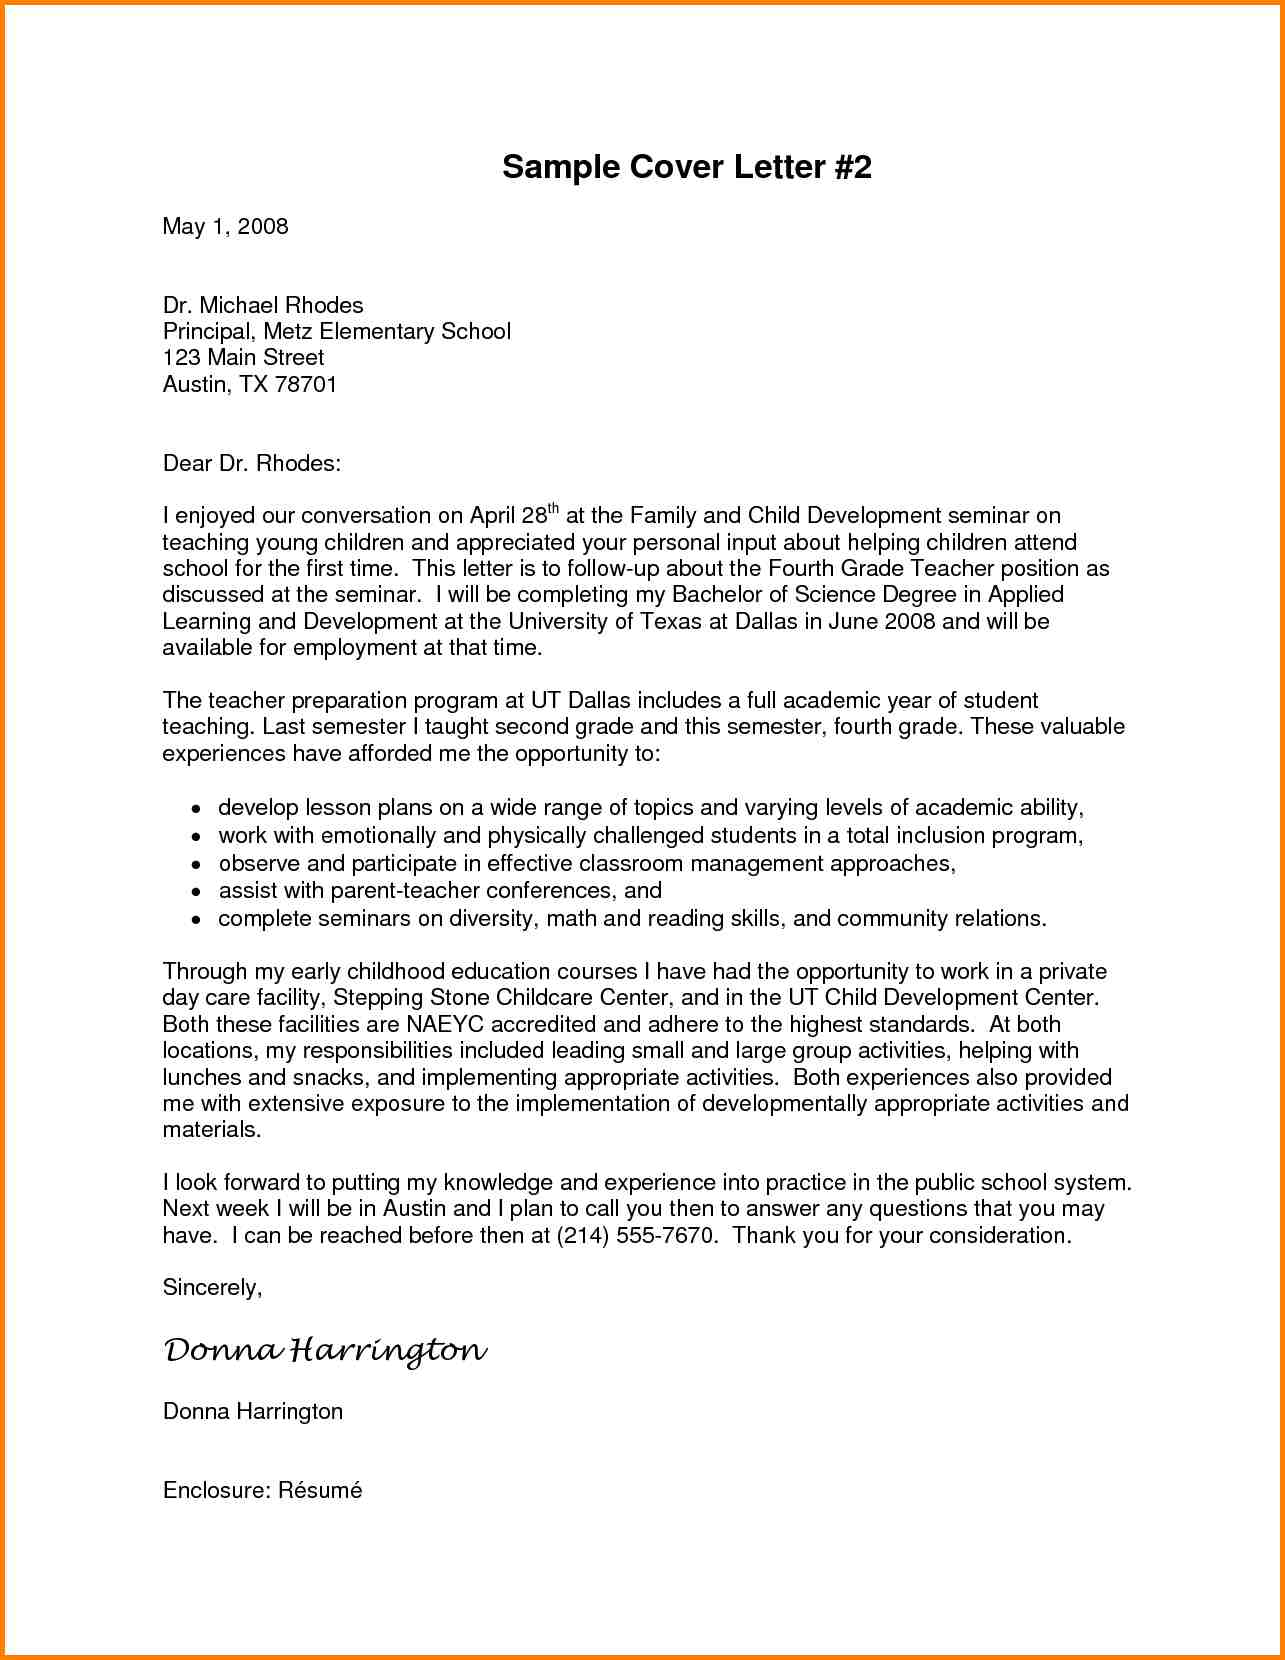 Letter format to the Principal Ameliasdesalto.com